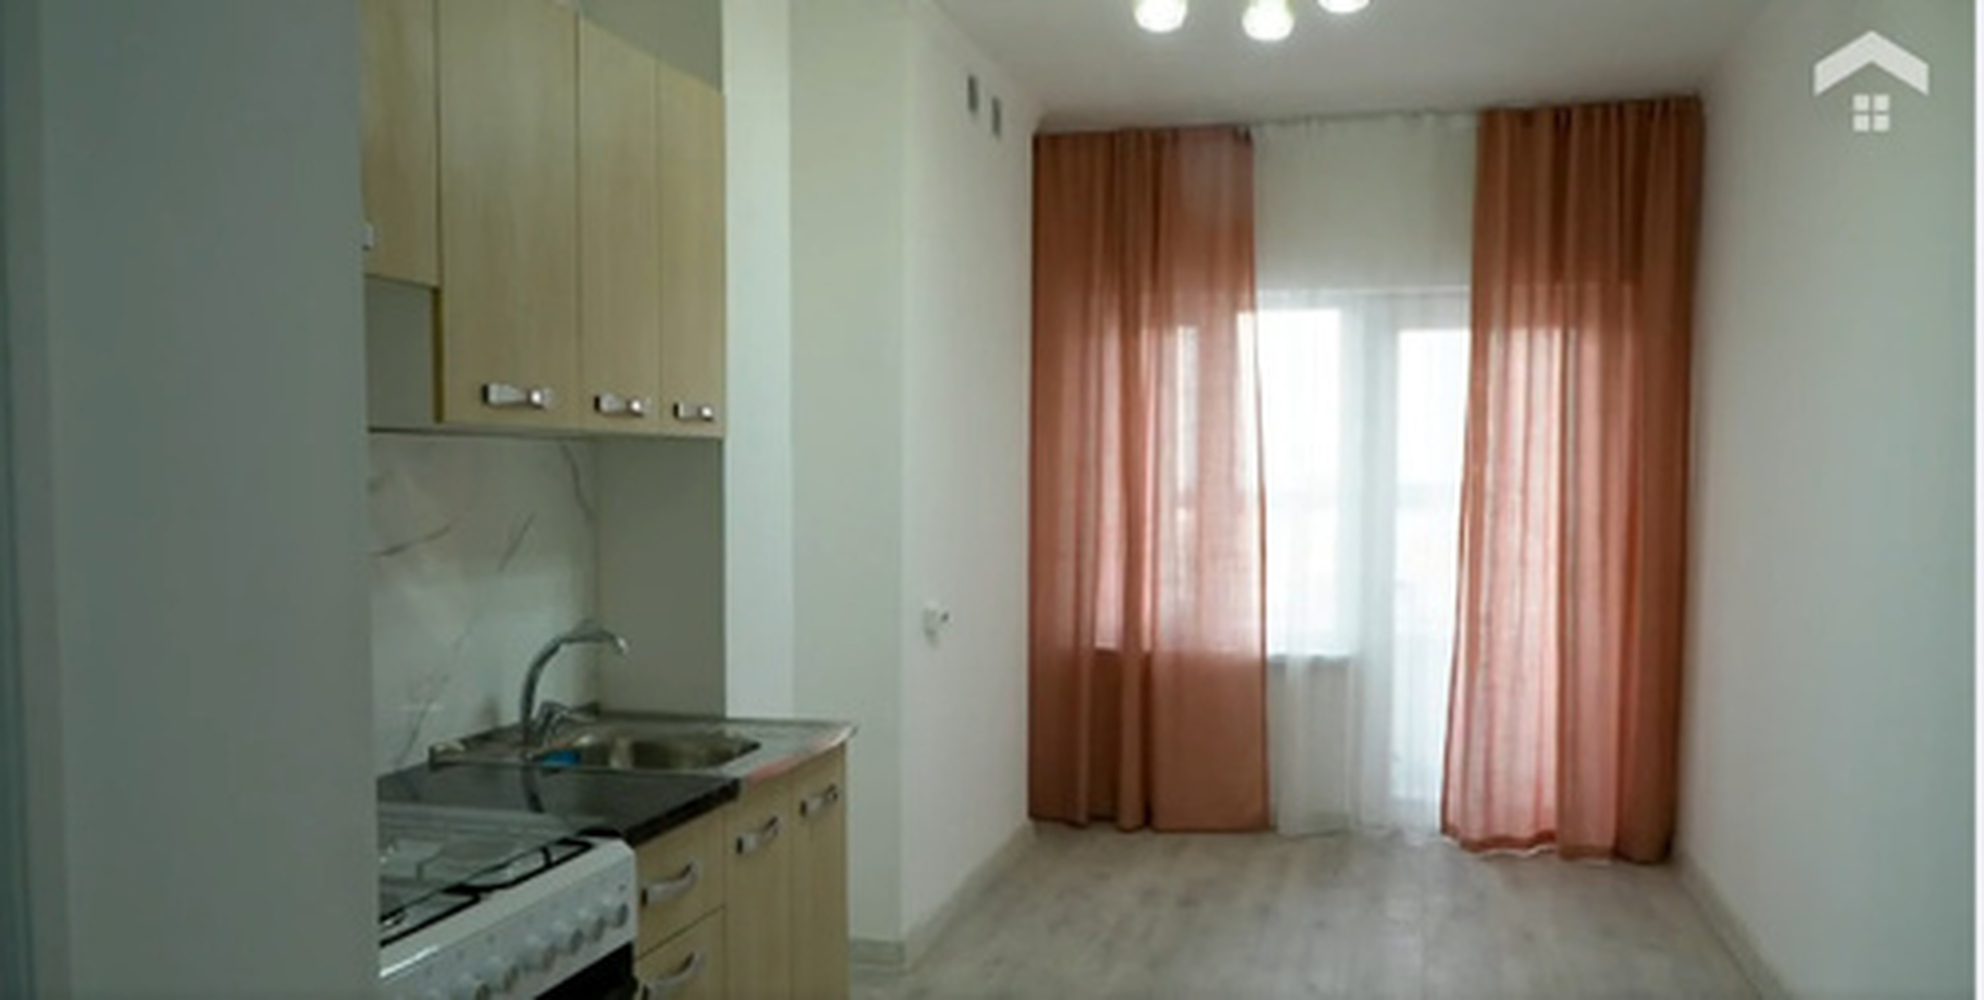 Как выглядят квартиры, которые будут выданы по госипотеке? Каныбек Туманбаев показал интерьер квартир (видео) — Today.kg